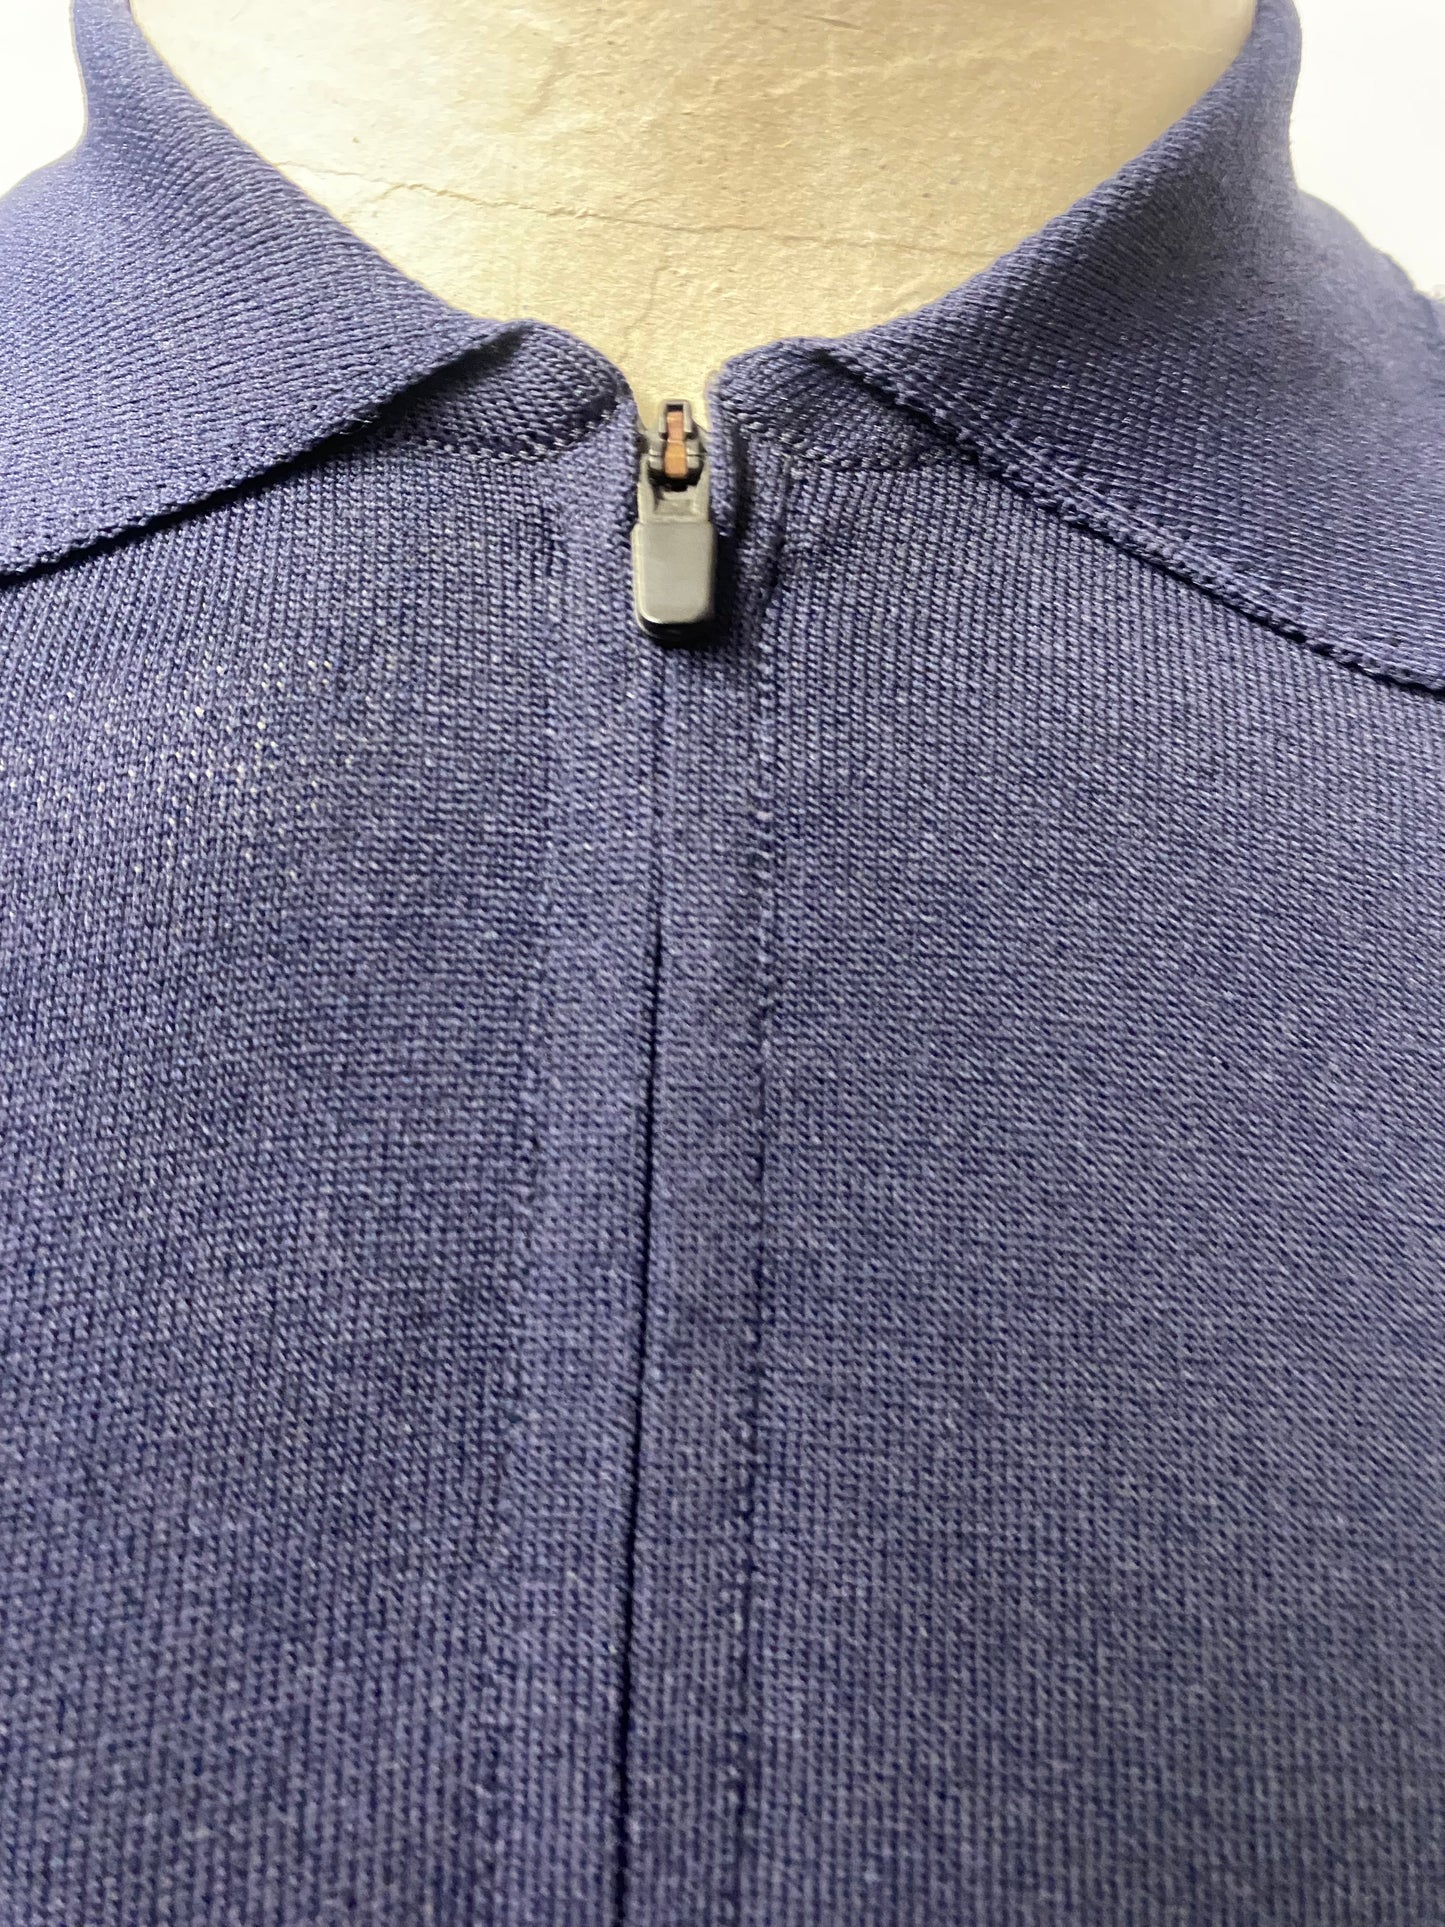 Bluemint Blue Knit Polo Shirt Medium BNWT